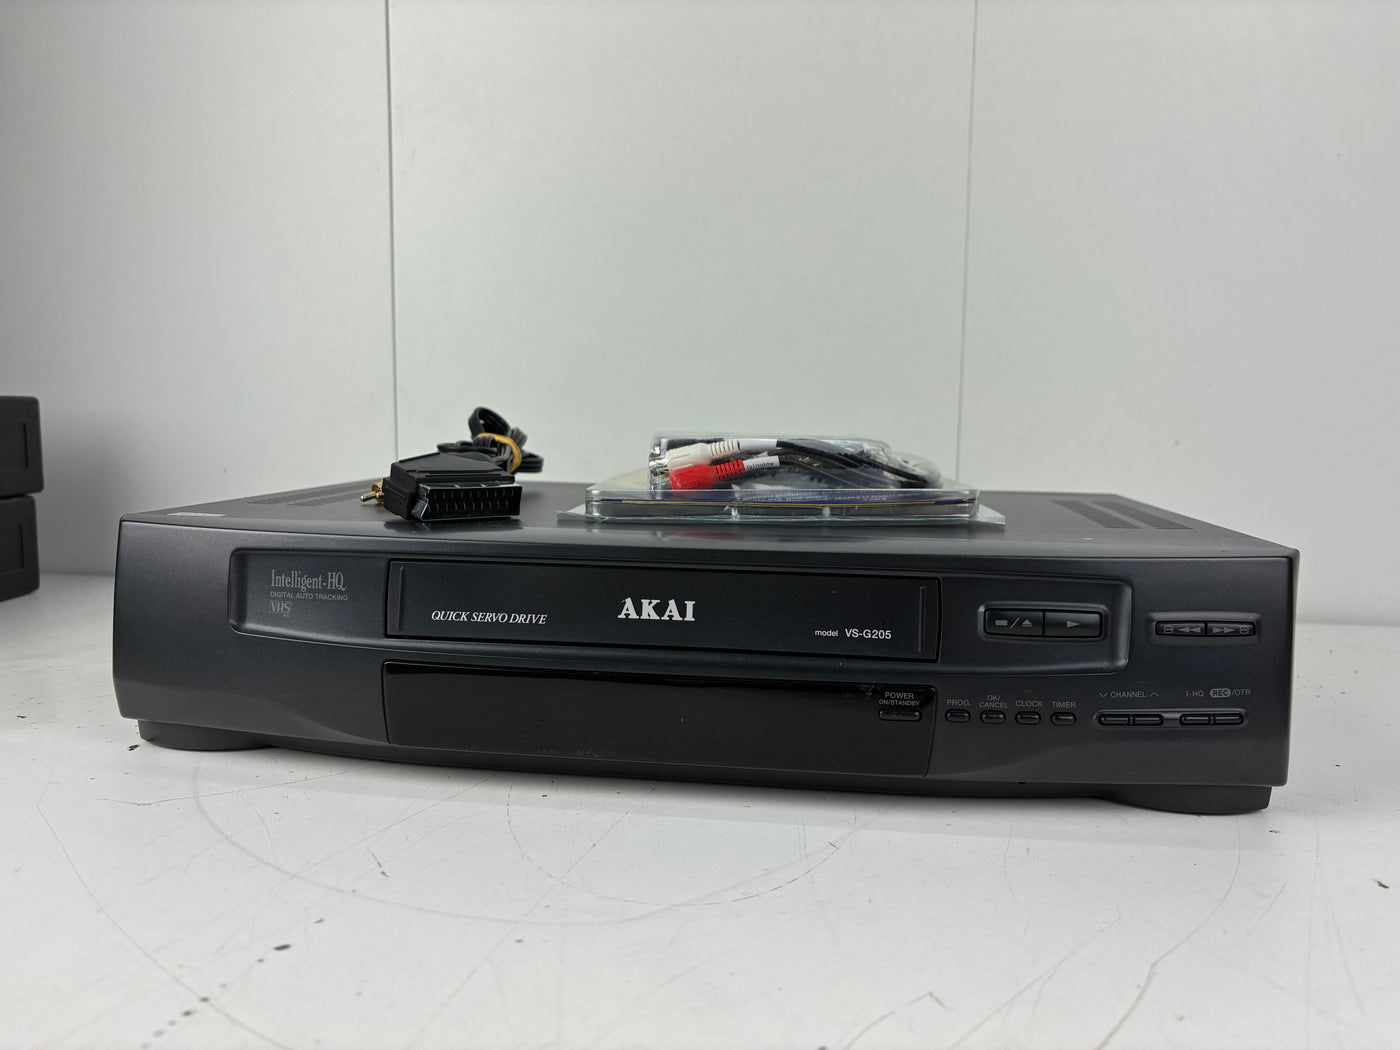 Akai VS-G205 VHS Videorecorder | Met digitalisatie starterspakket